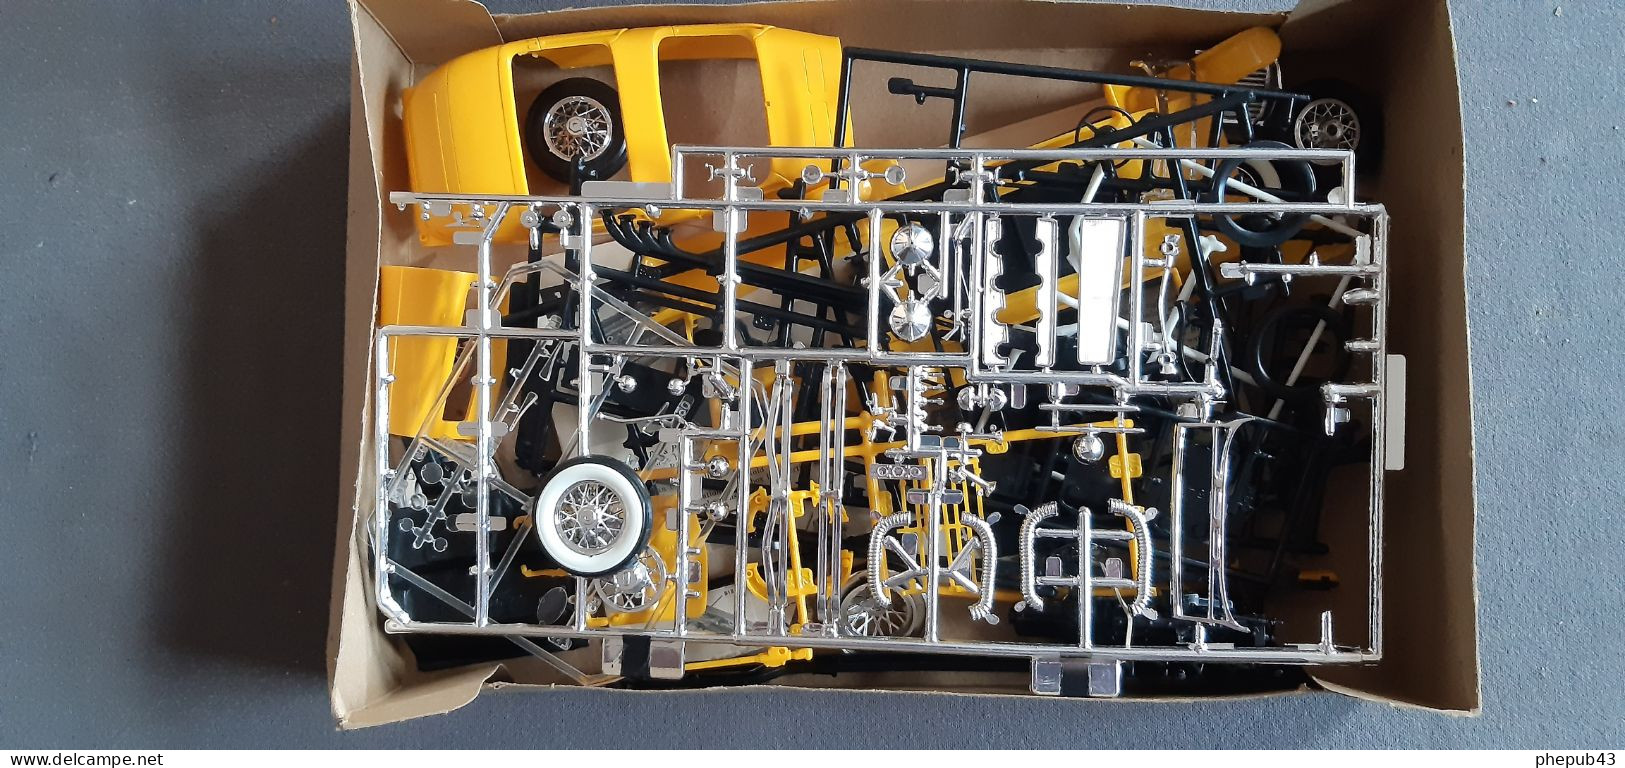 Duensenberg SJ Torpedo-Phaeton - 1934 - Yellow/black - Model Kit - Monogram (Mattel) (1/24) Réf ; 8201 - Automobili